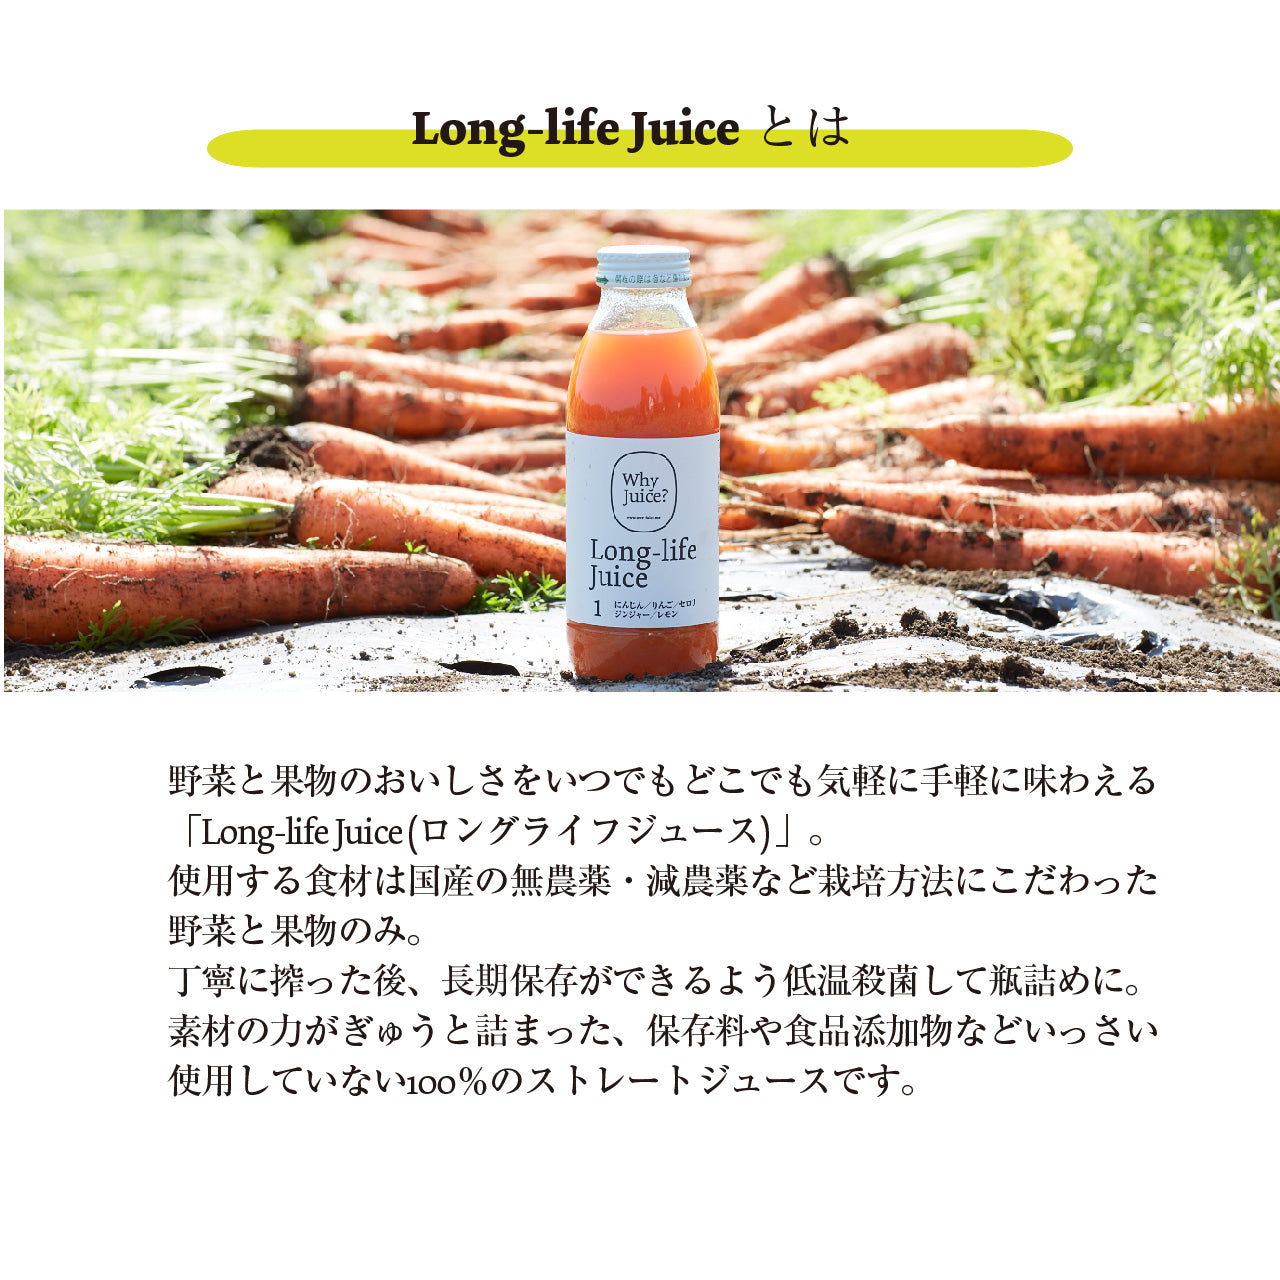 Long-life Juice4：ぶどうミックス (20本入)